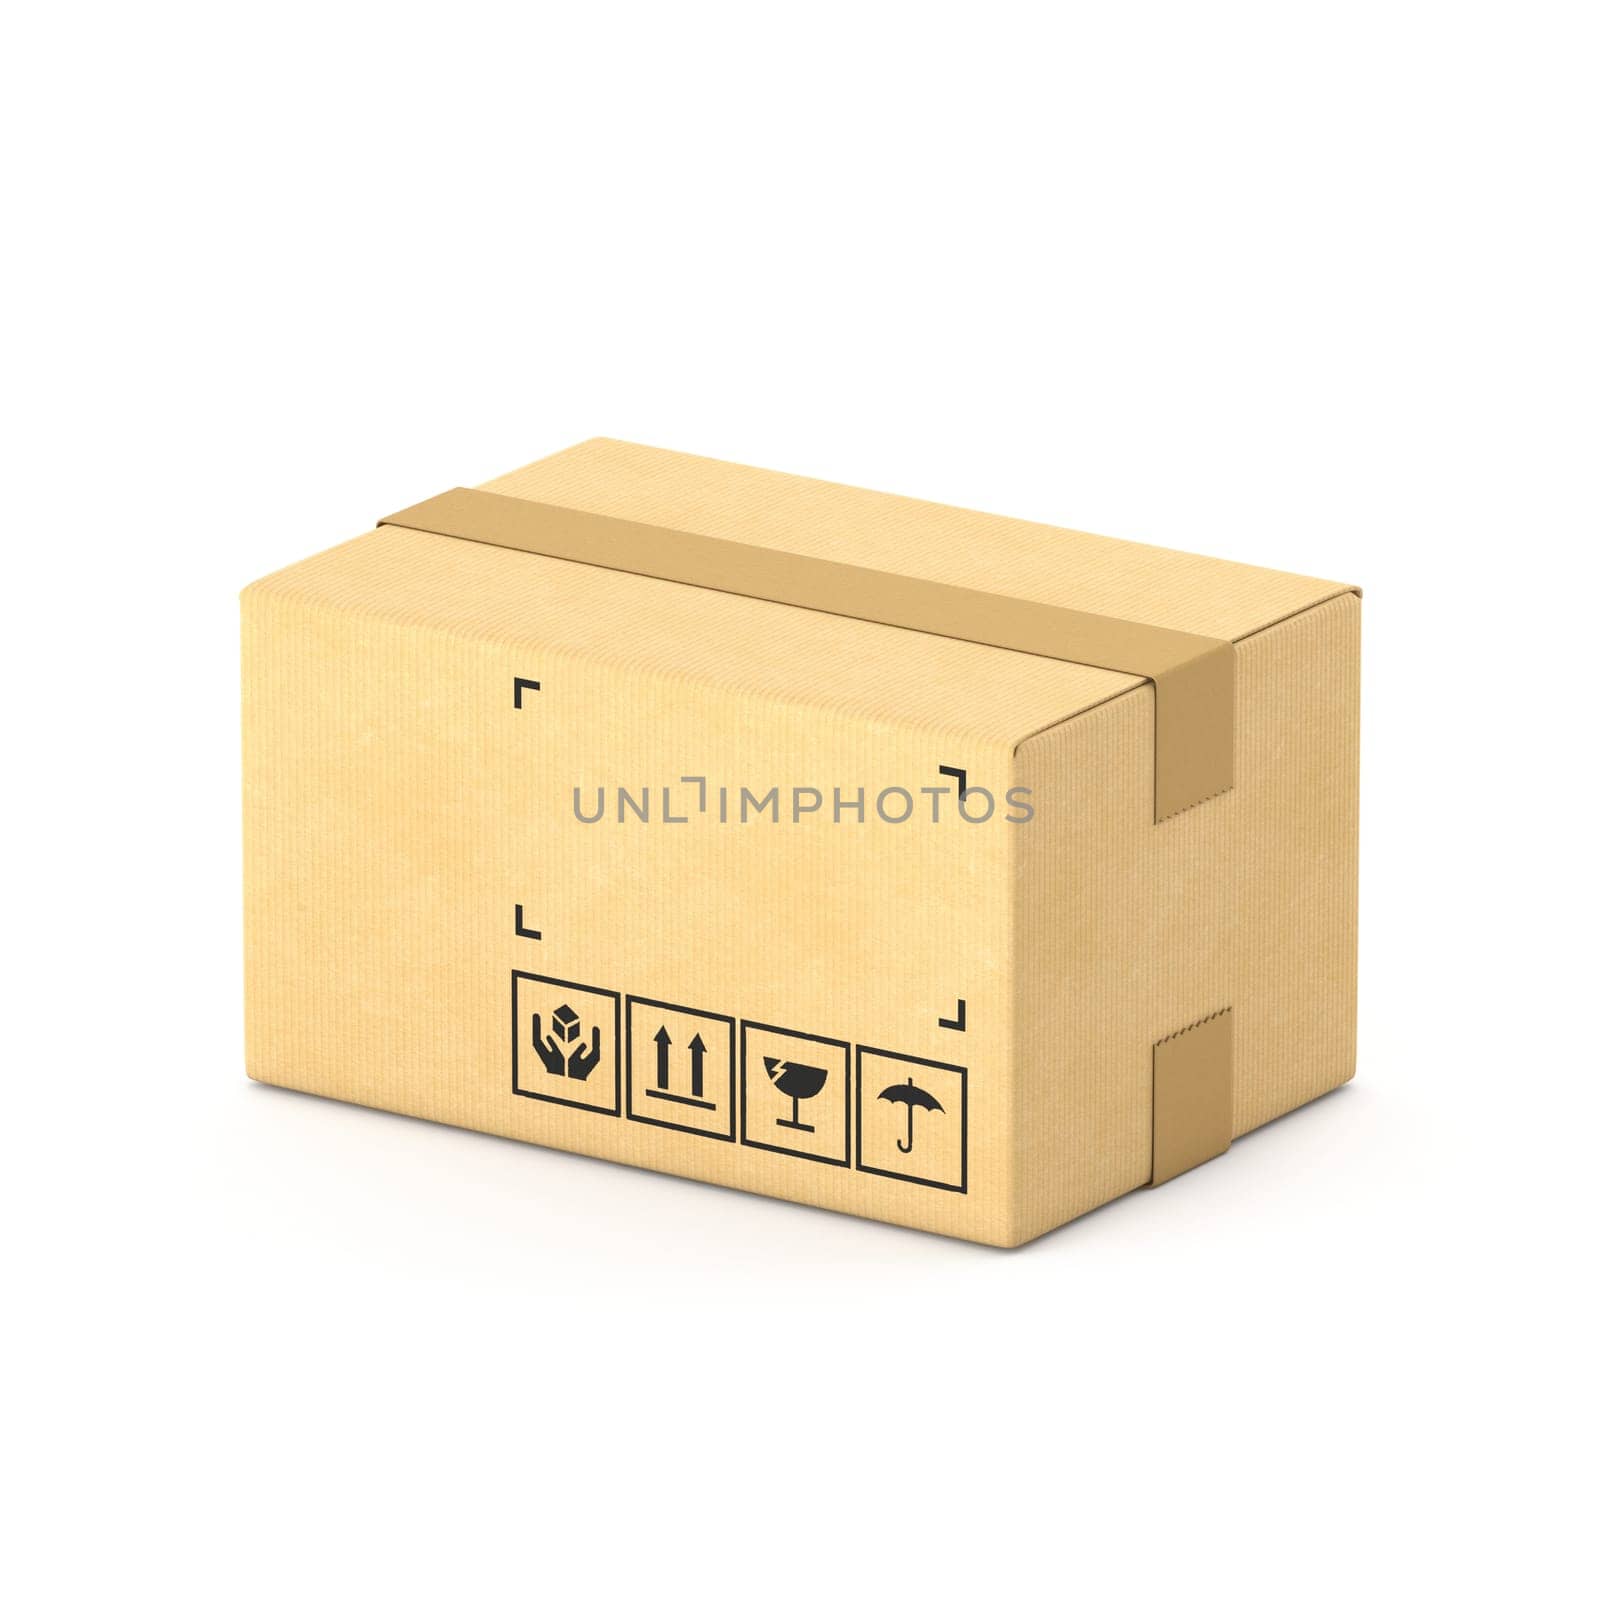 Cardboard box 3D by djmilic